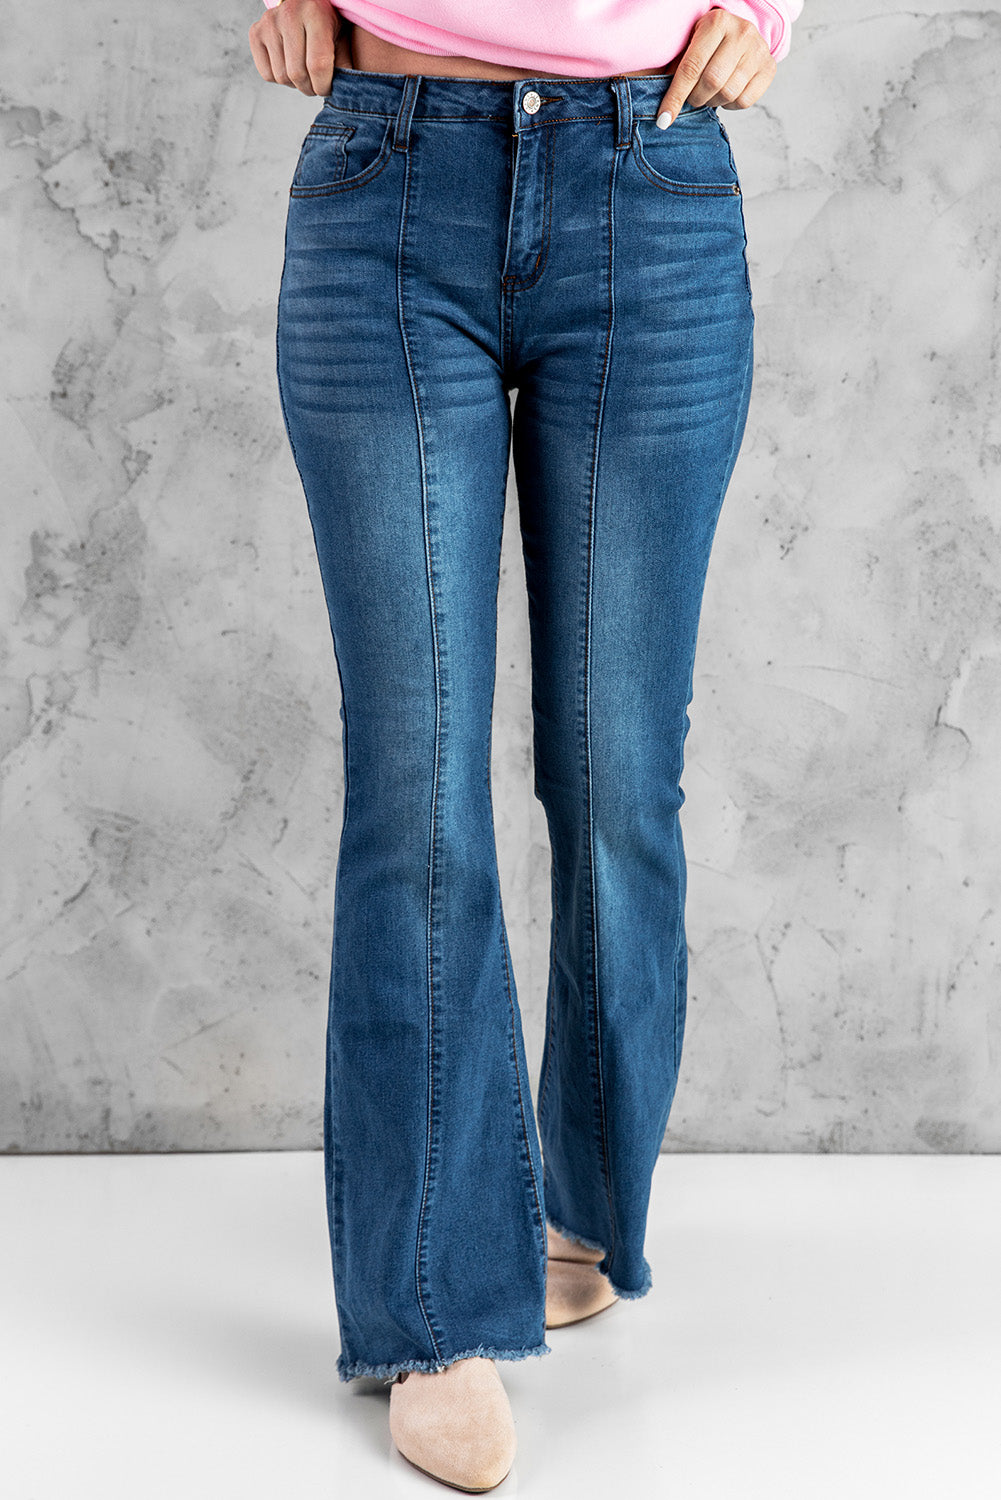 Blue Raw Hem Flared Jeans with Pockets Blue 73%Cotton+25.5%Polyester+1.5%Elastane Jeans JT's Designer Fashion